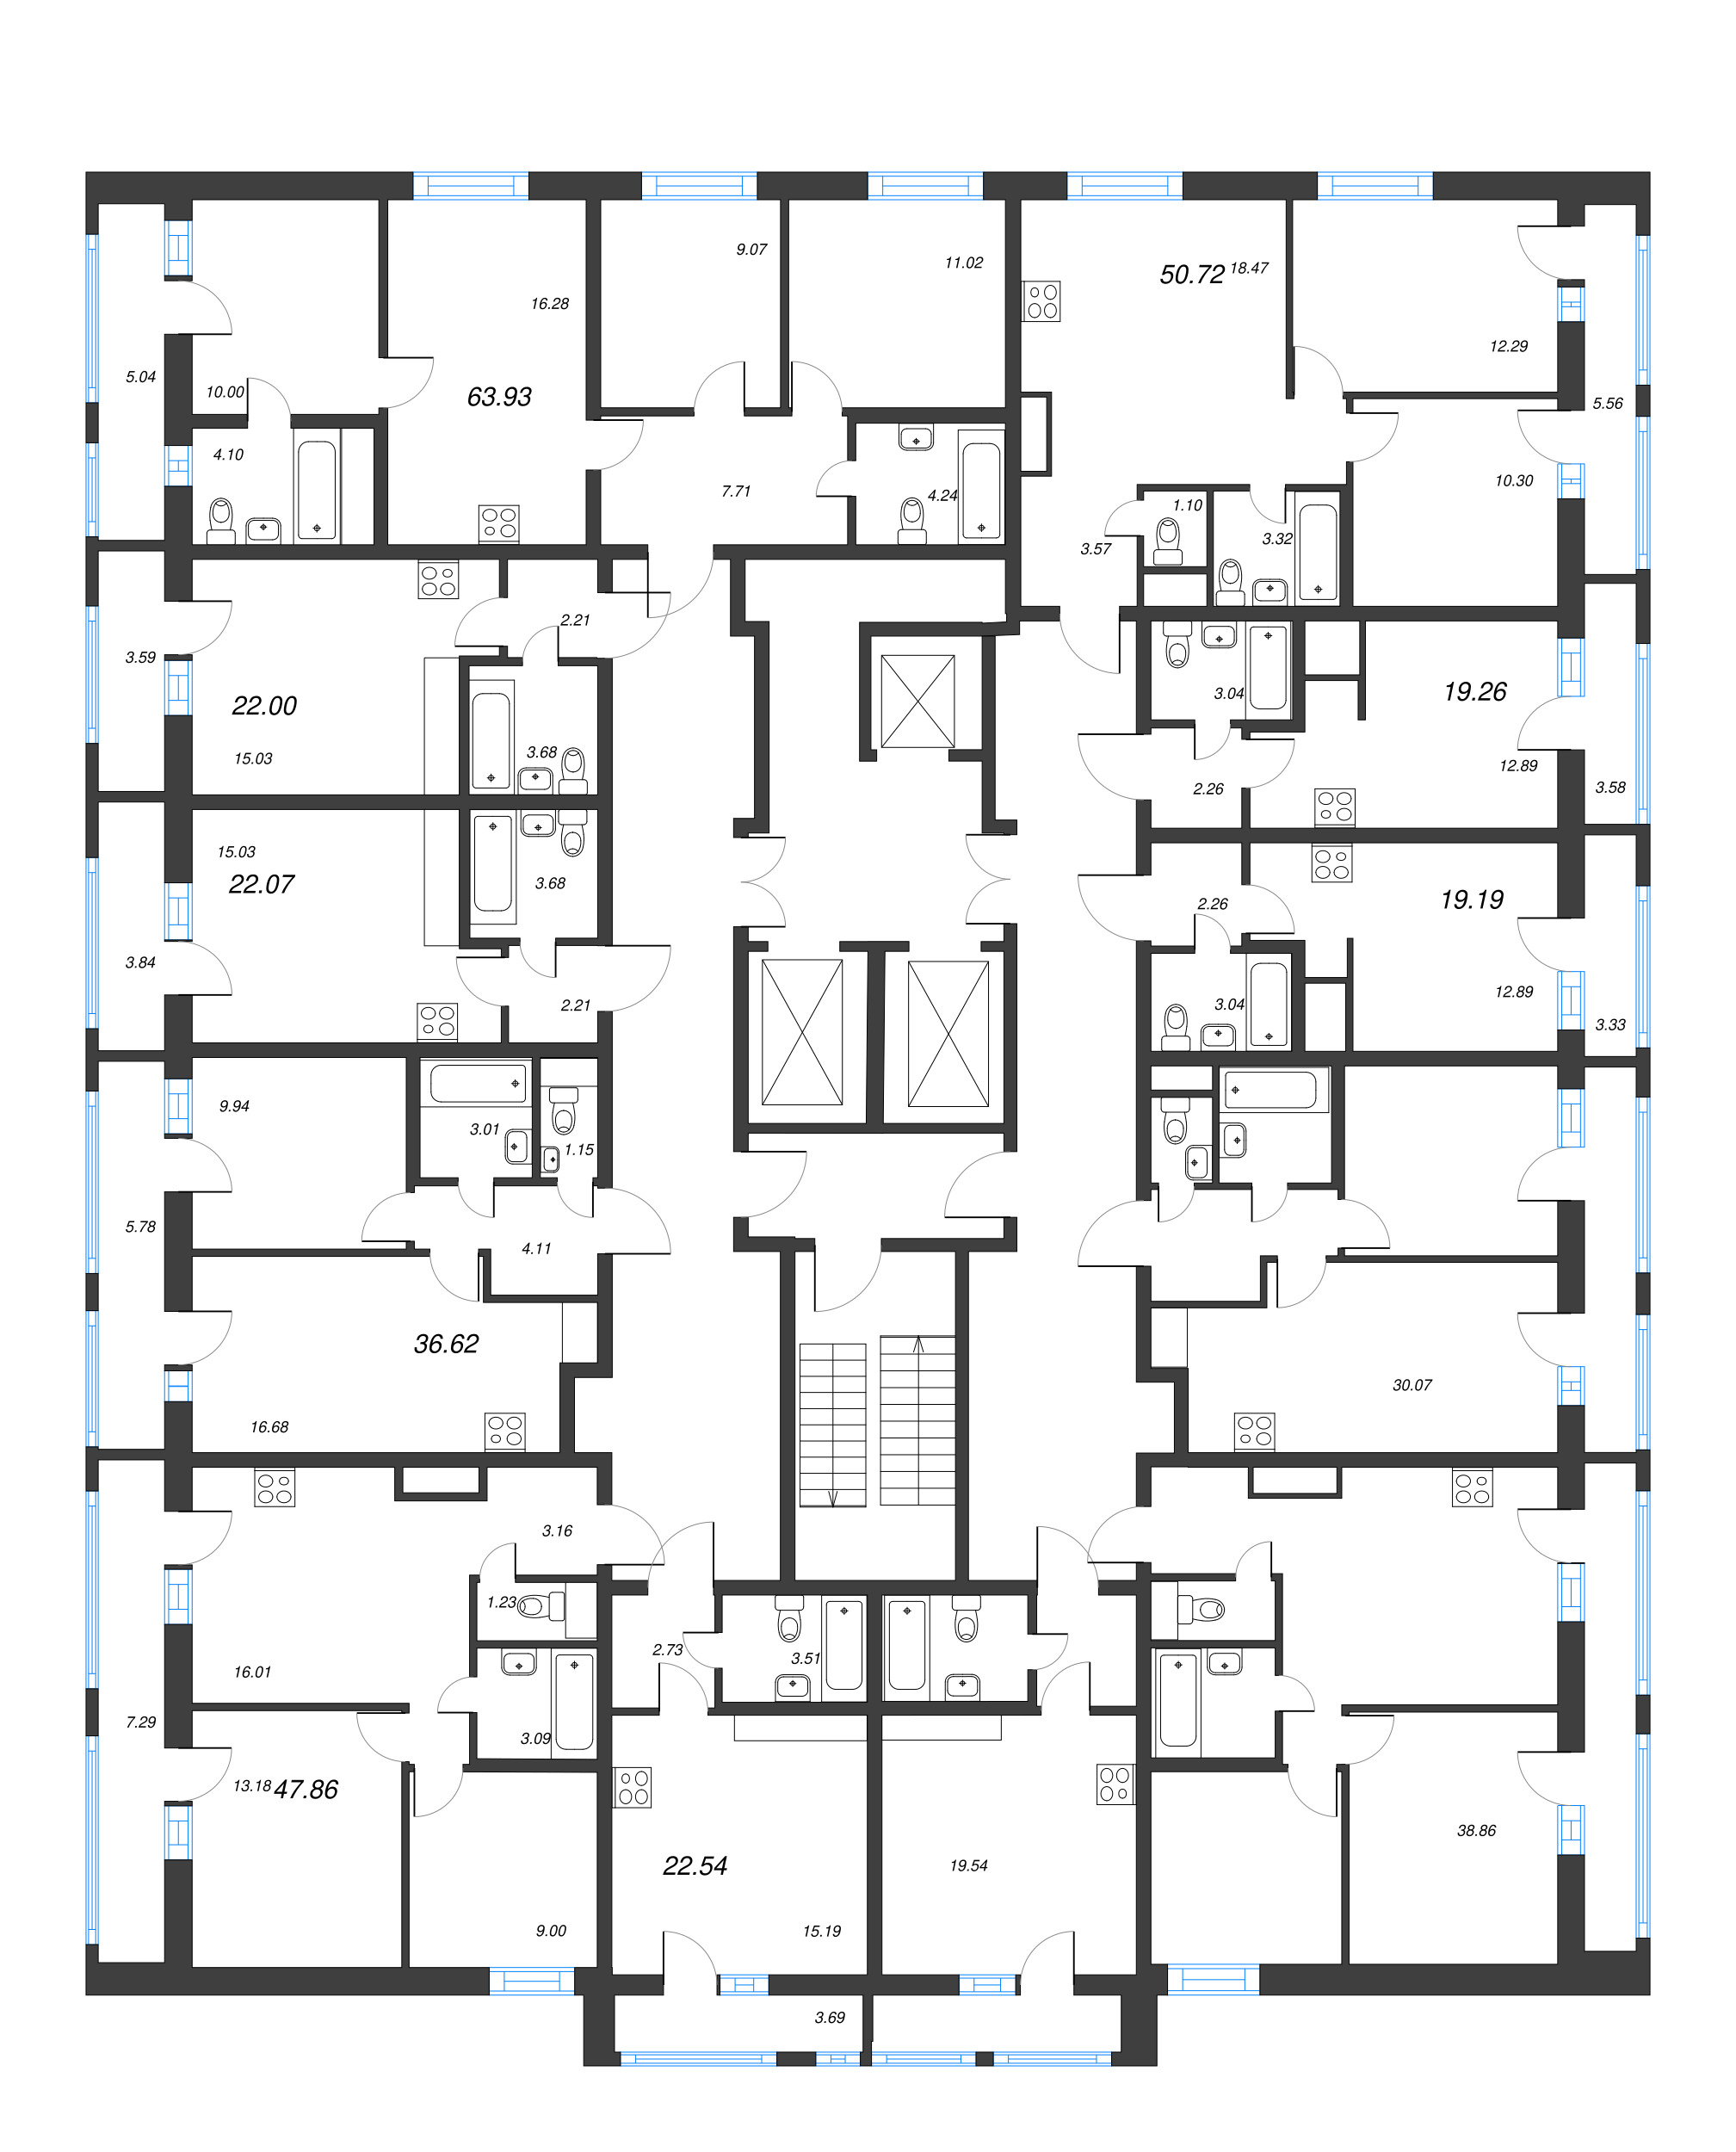 2-комнатная (Евро) квартира, 36.62 м² - планировка этажа